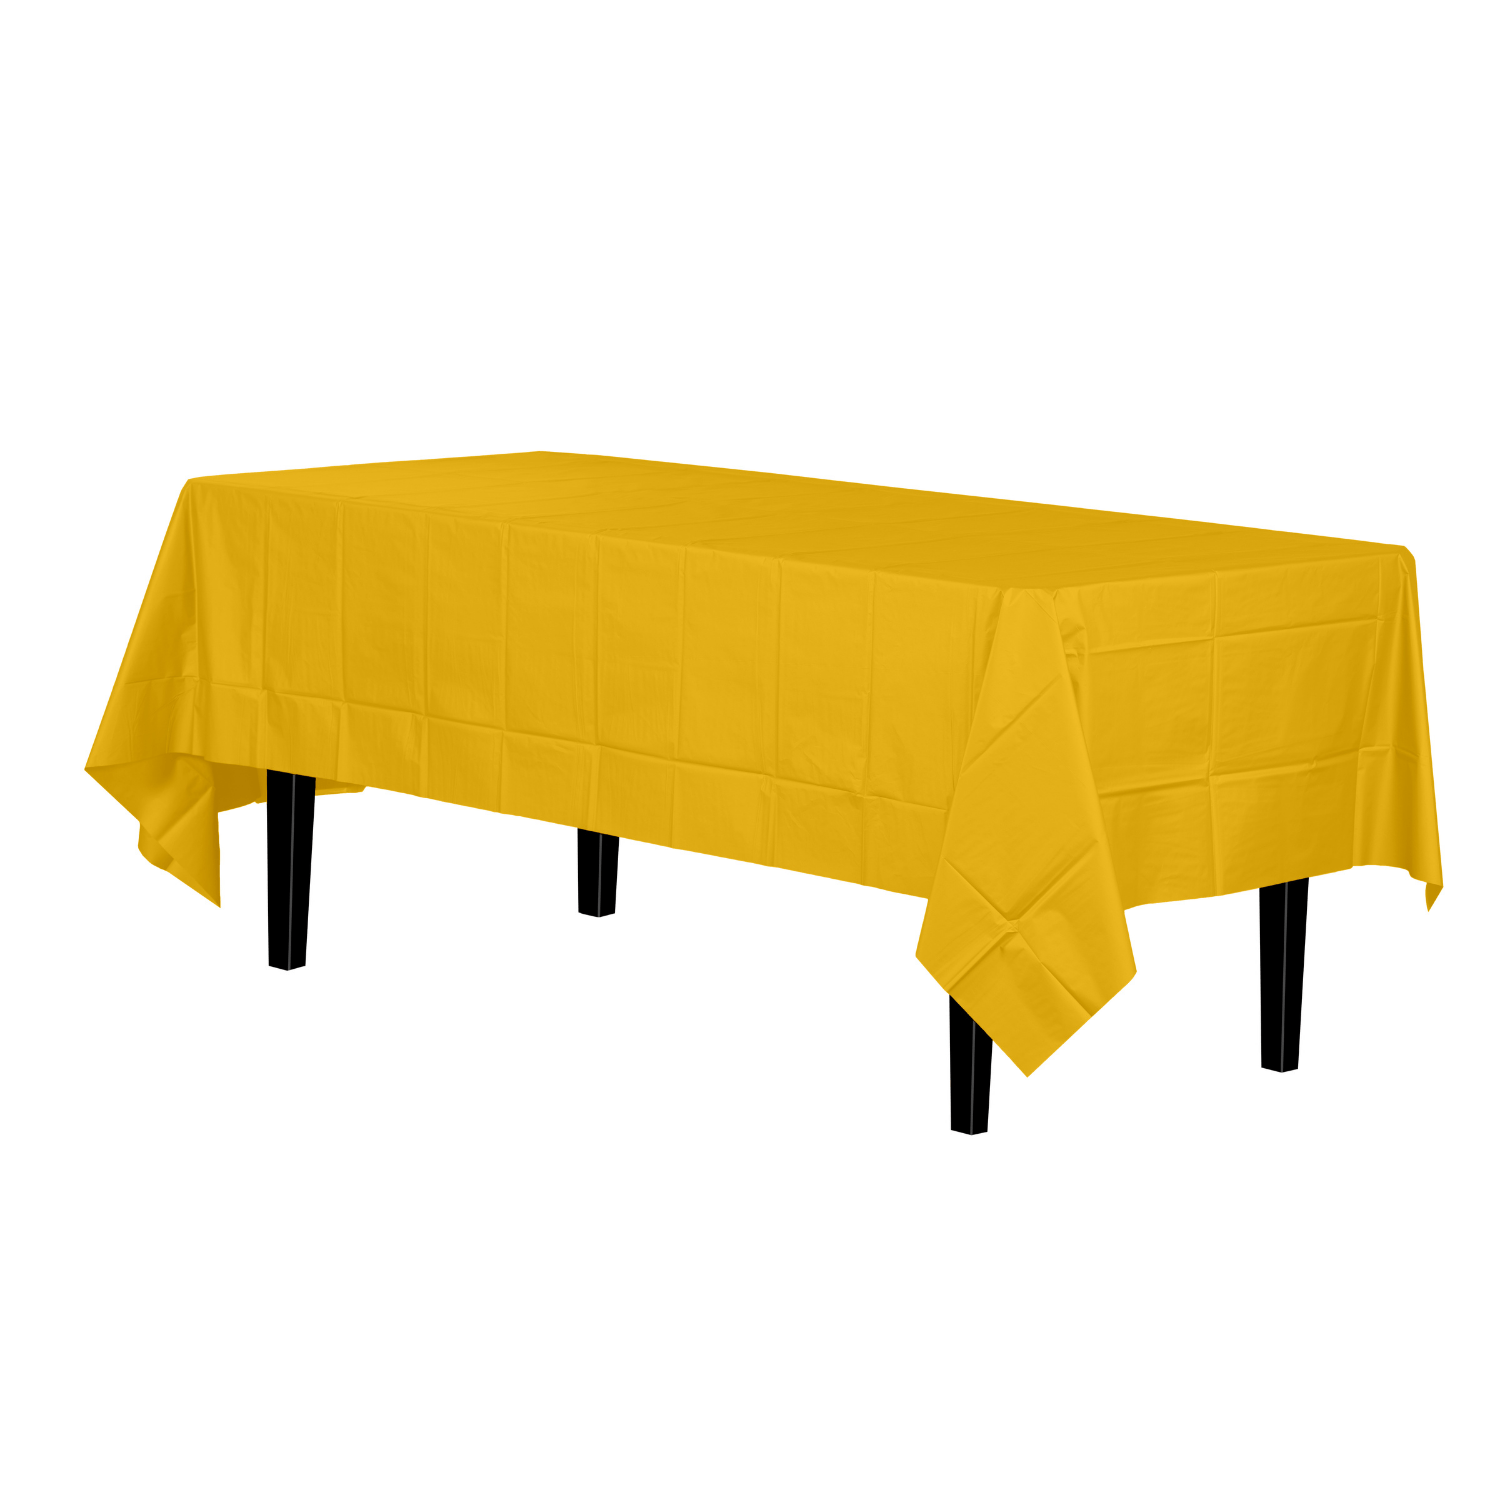 Premium Yellow Plastic Tablecloth | 96 Count